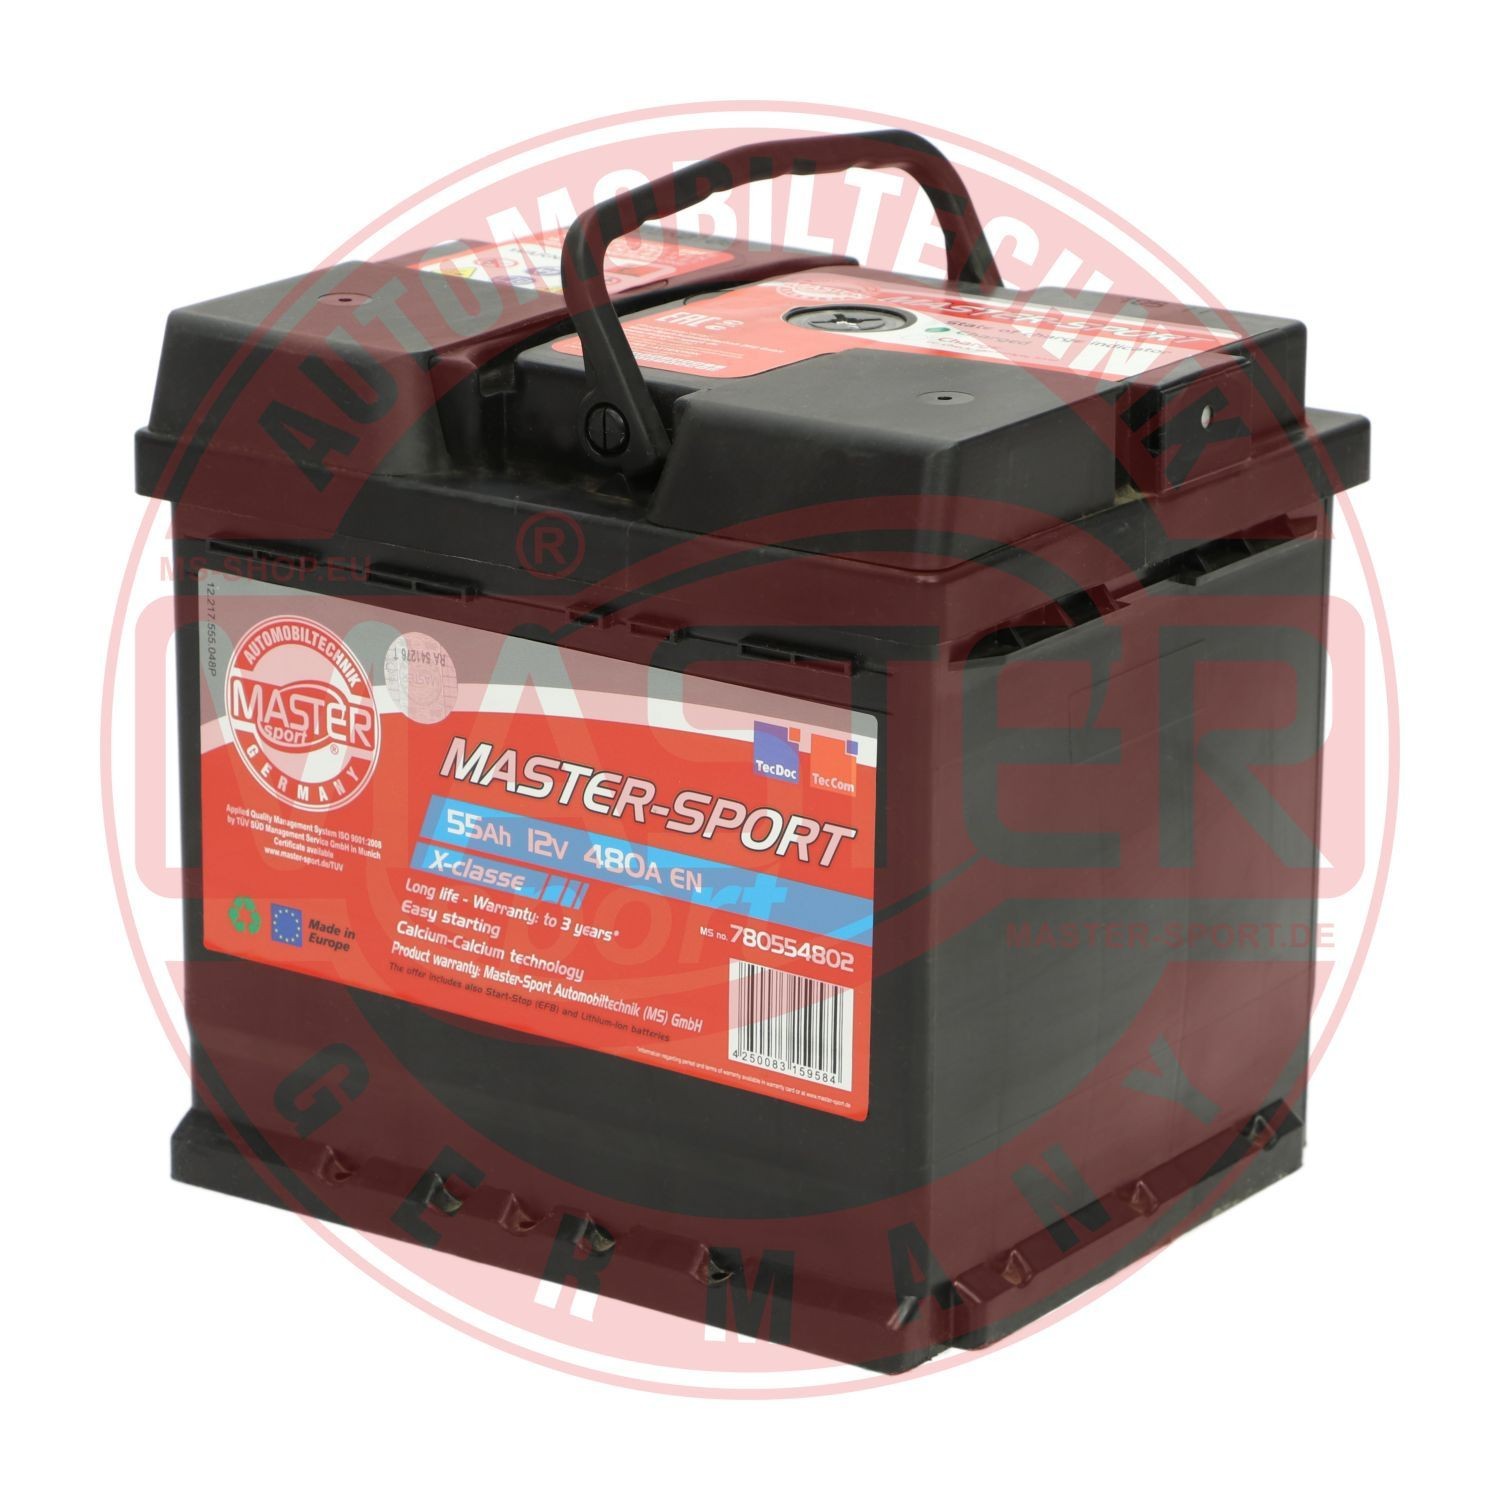 780554802 MASTER-SPORT Car battery KIA 12V 55Ah 480A B13 L1 Lead-acid battery